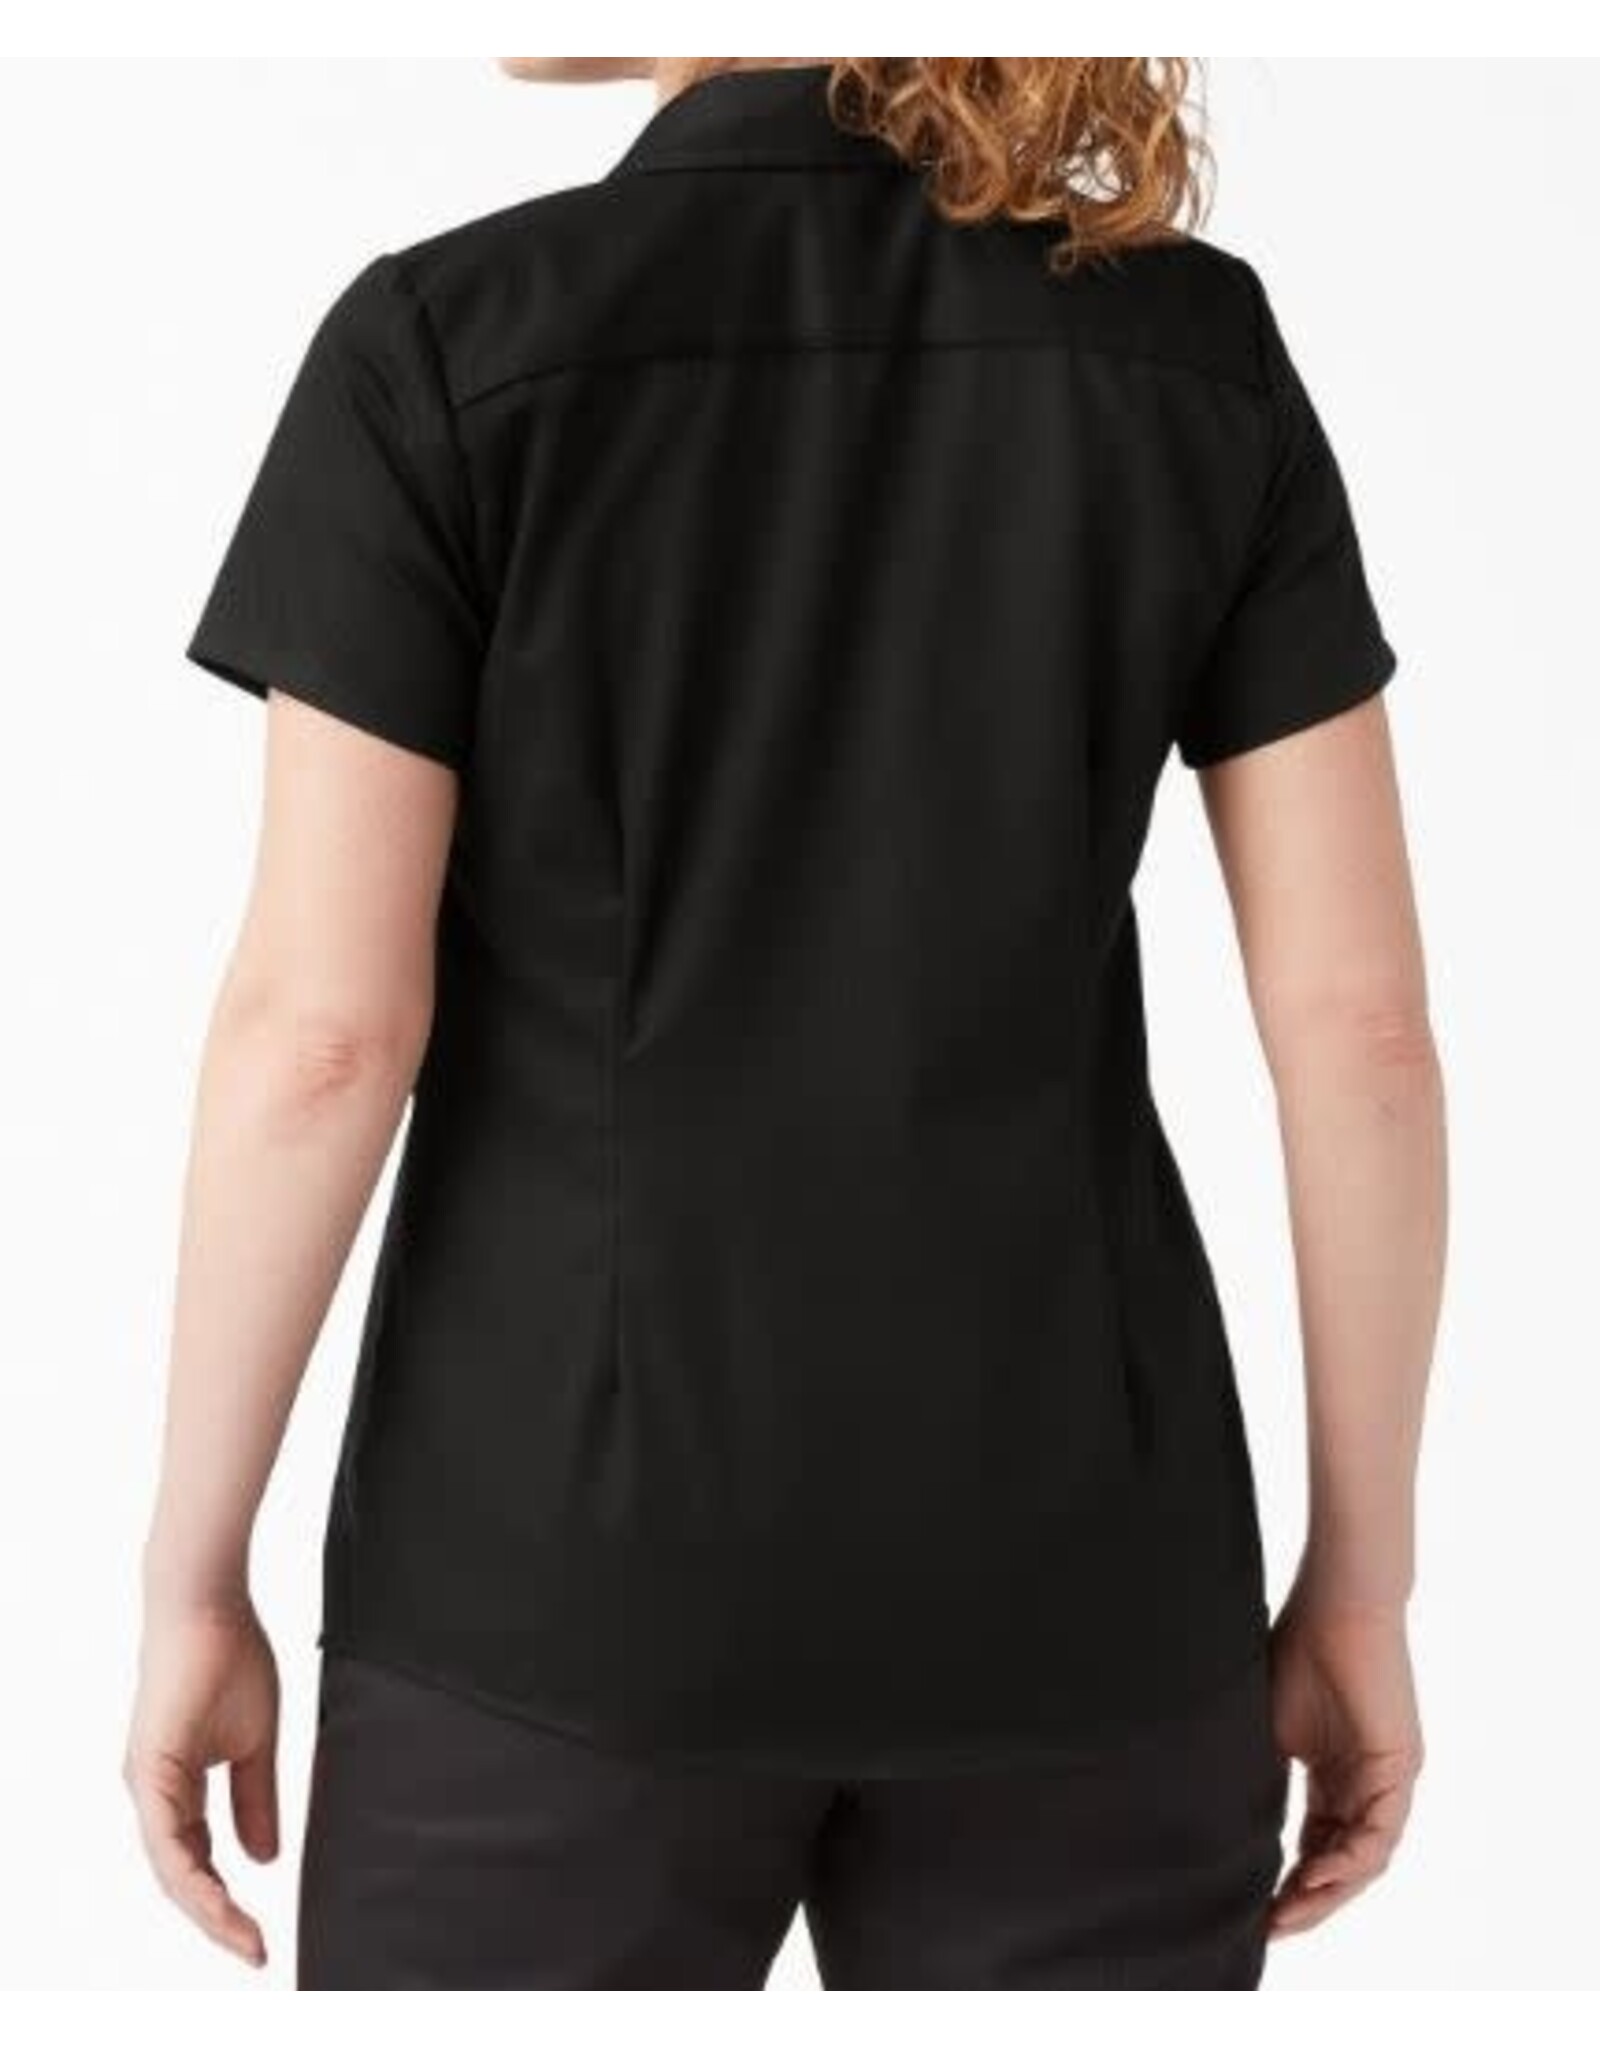 DICKIES Women's 574 Original Work Shirt Black - FS574BK